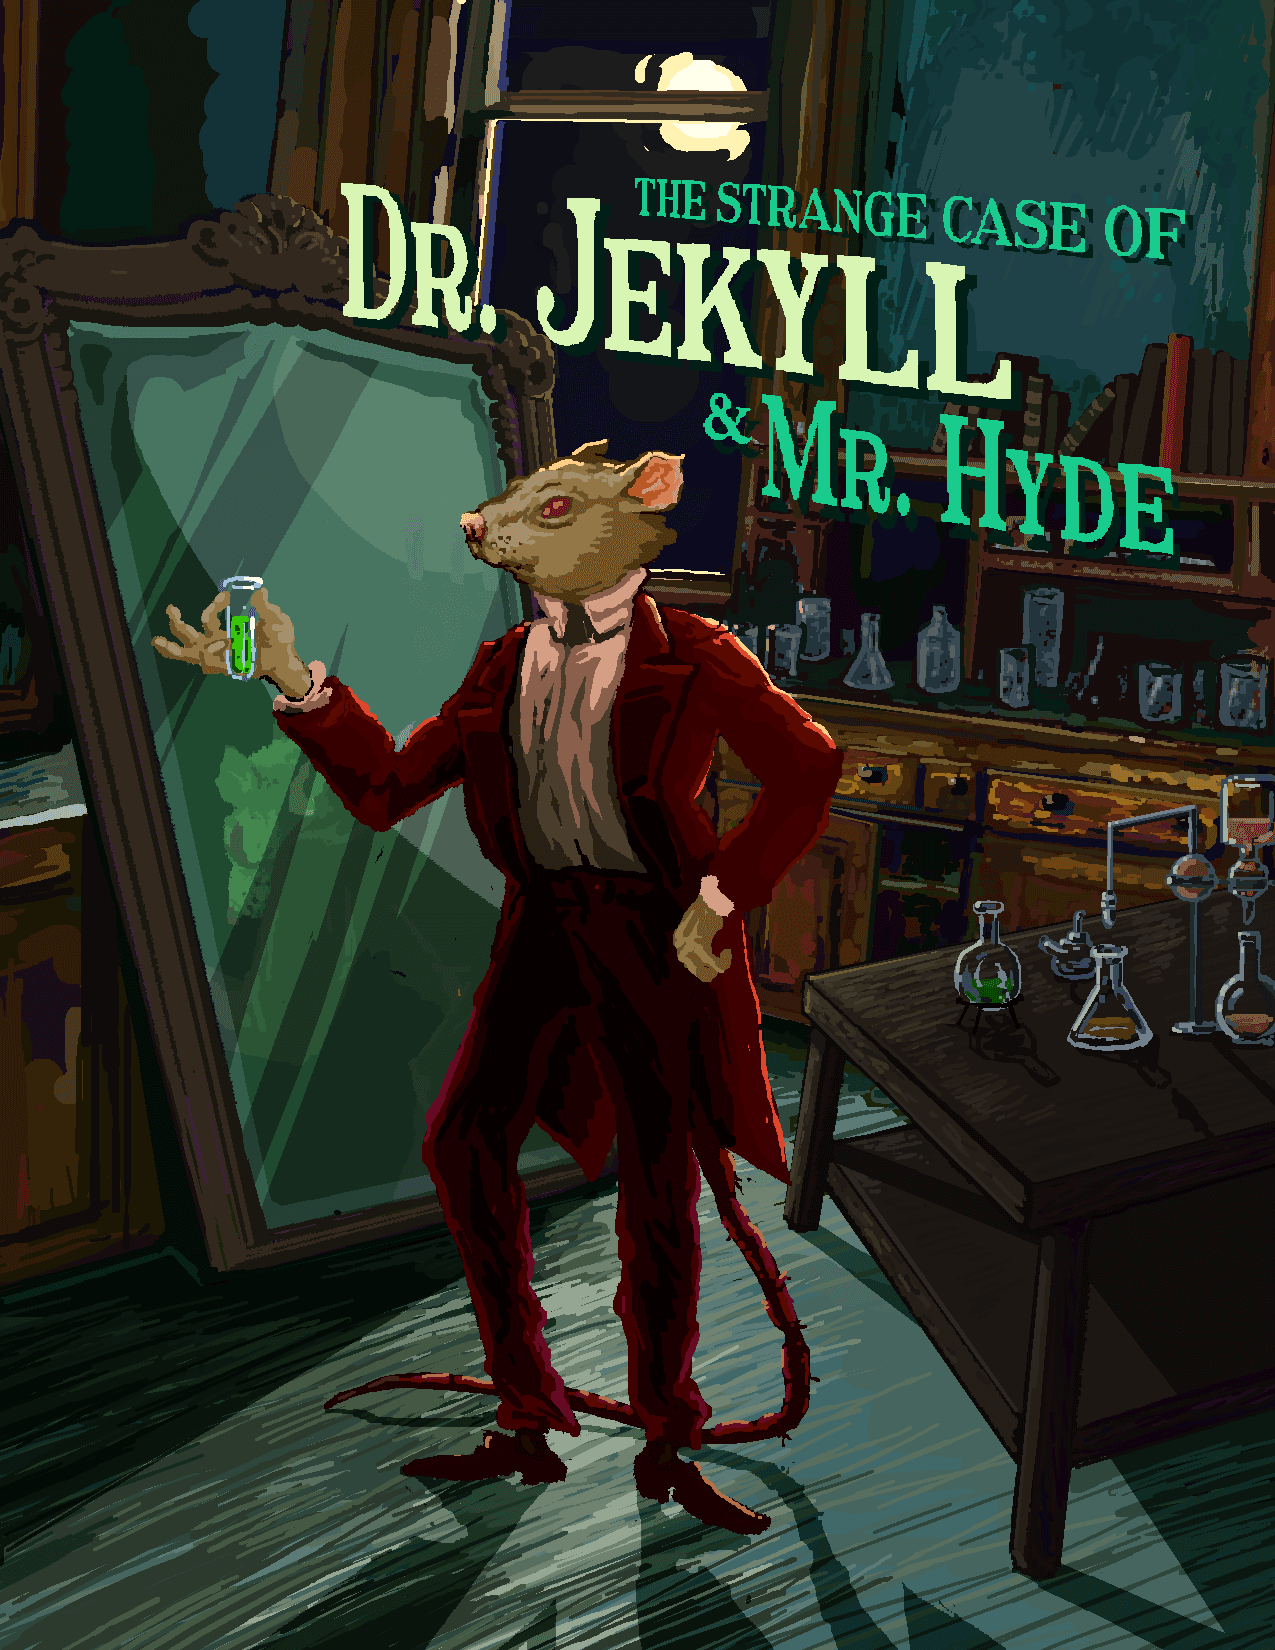 Dr. Jekyll #667